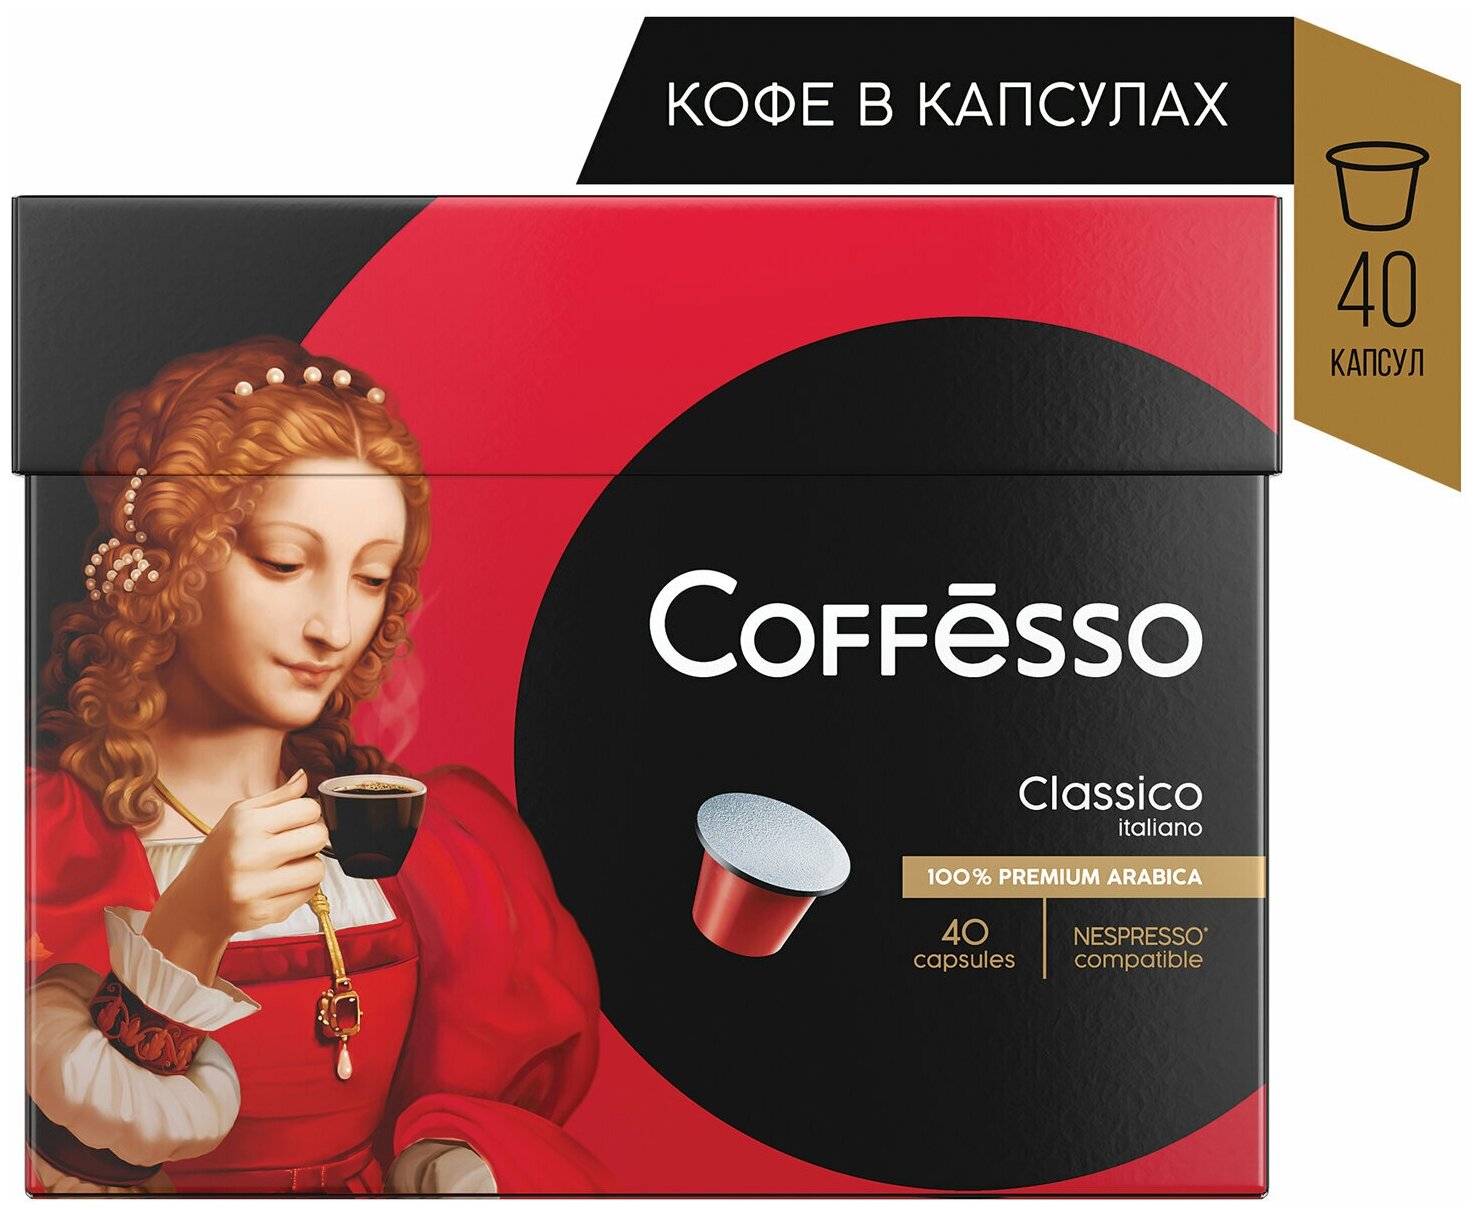 Кофе в капсулах COFFESSO Classico Italiano для кофемашин Nespresso, 100% арабика, 40 порций, 101733 - фотография № 1